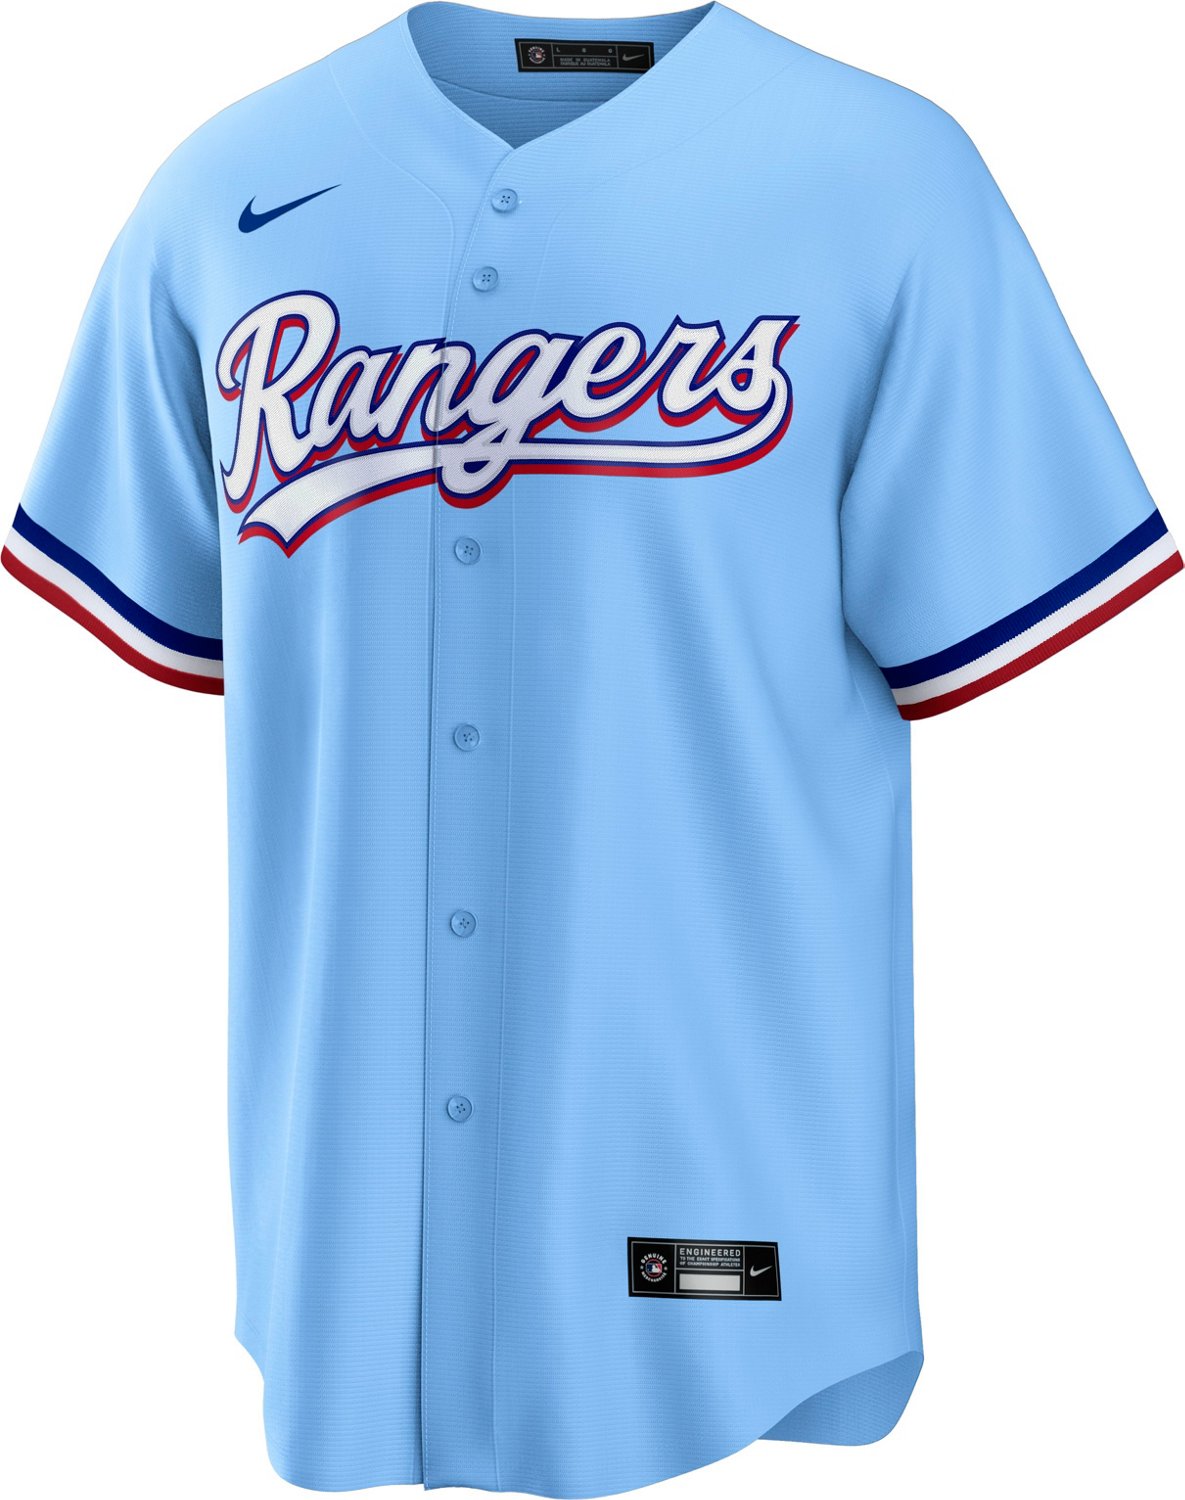 Nike Men's Texas Rangers Official Replica Jersey